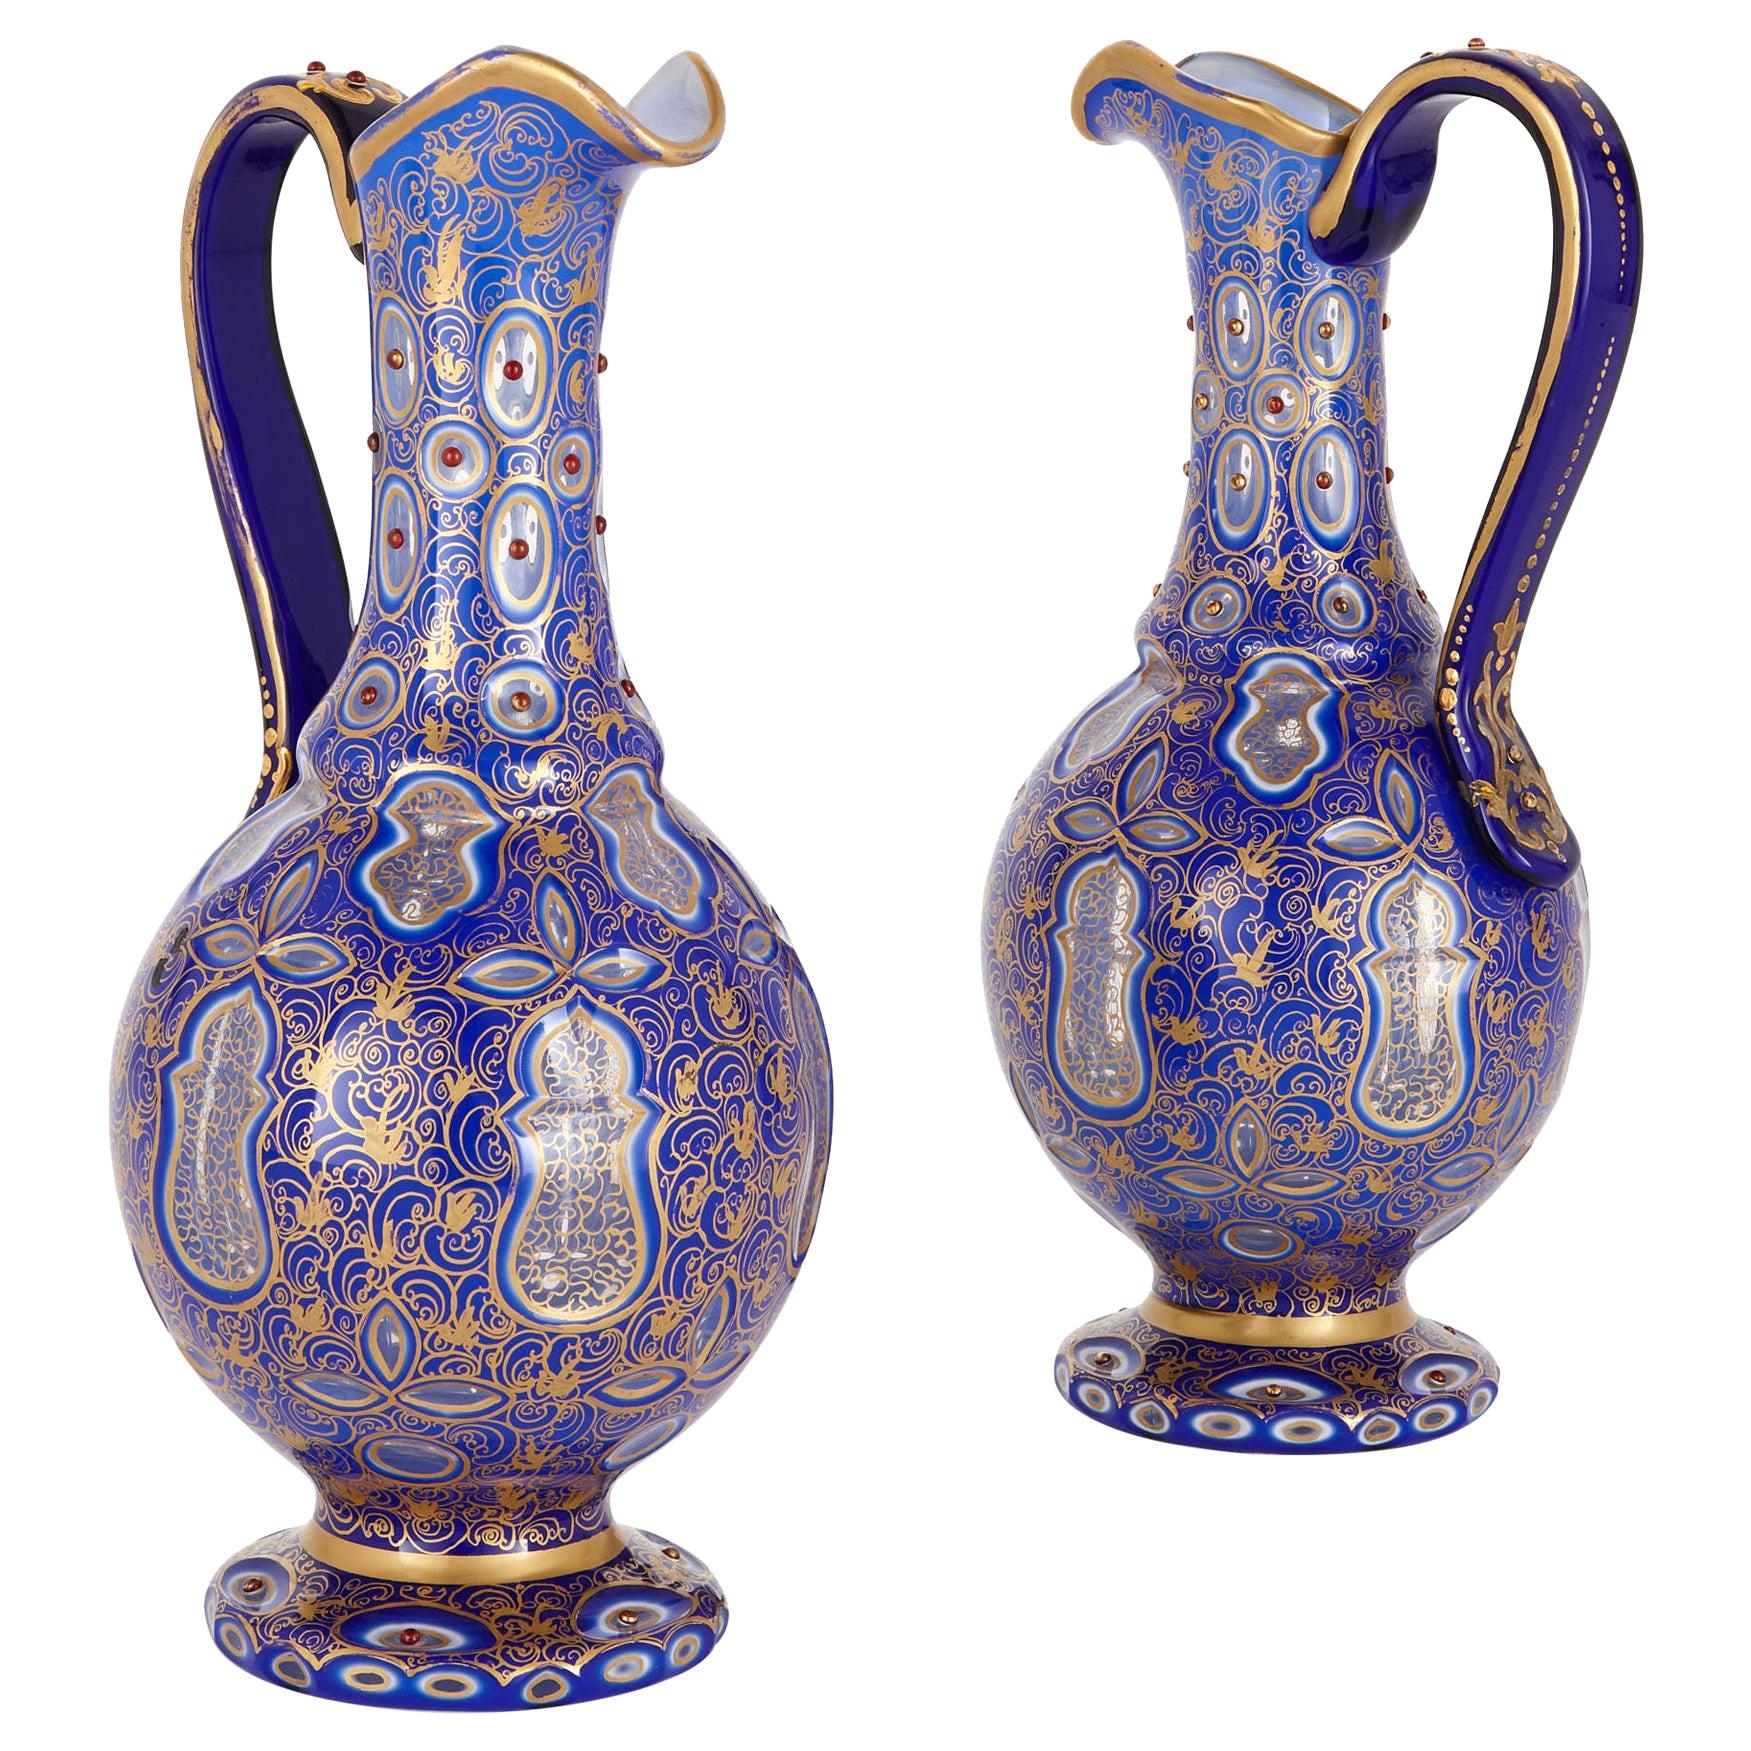 Two Bohemian Persian Style Jeweled and Gilt Blue Glass Jugs